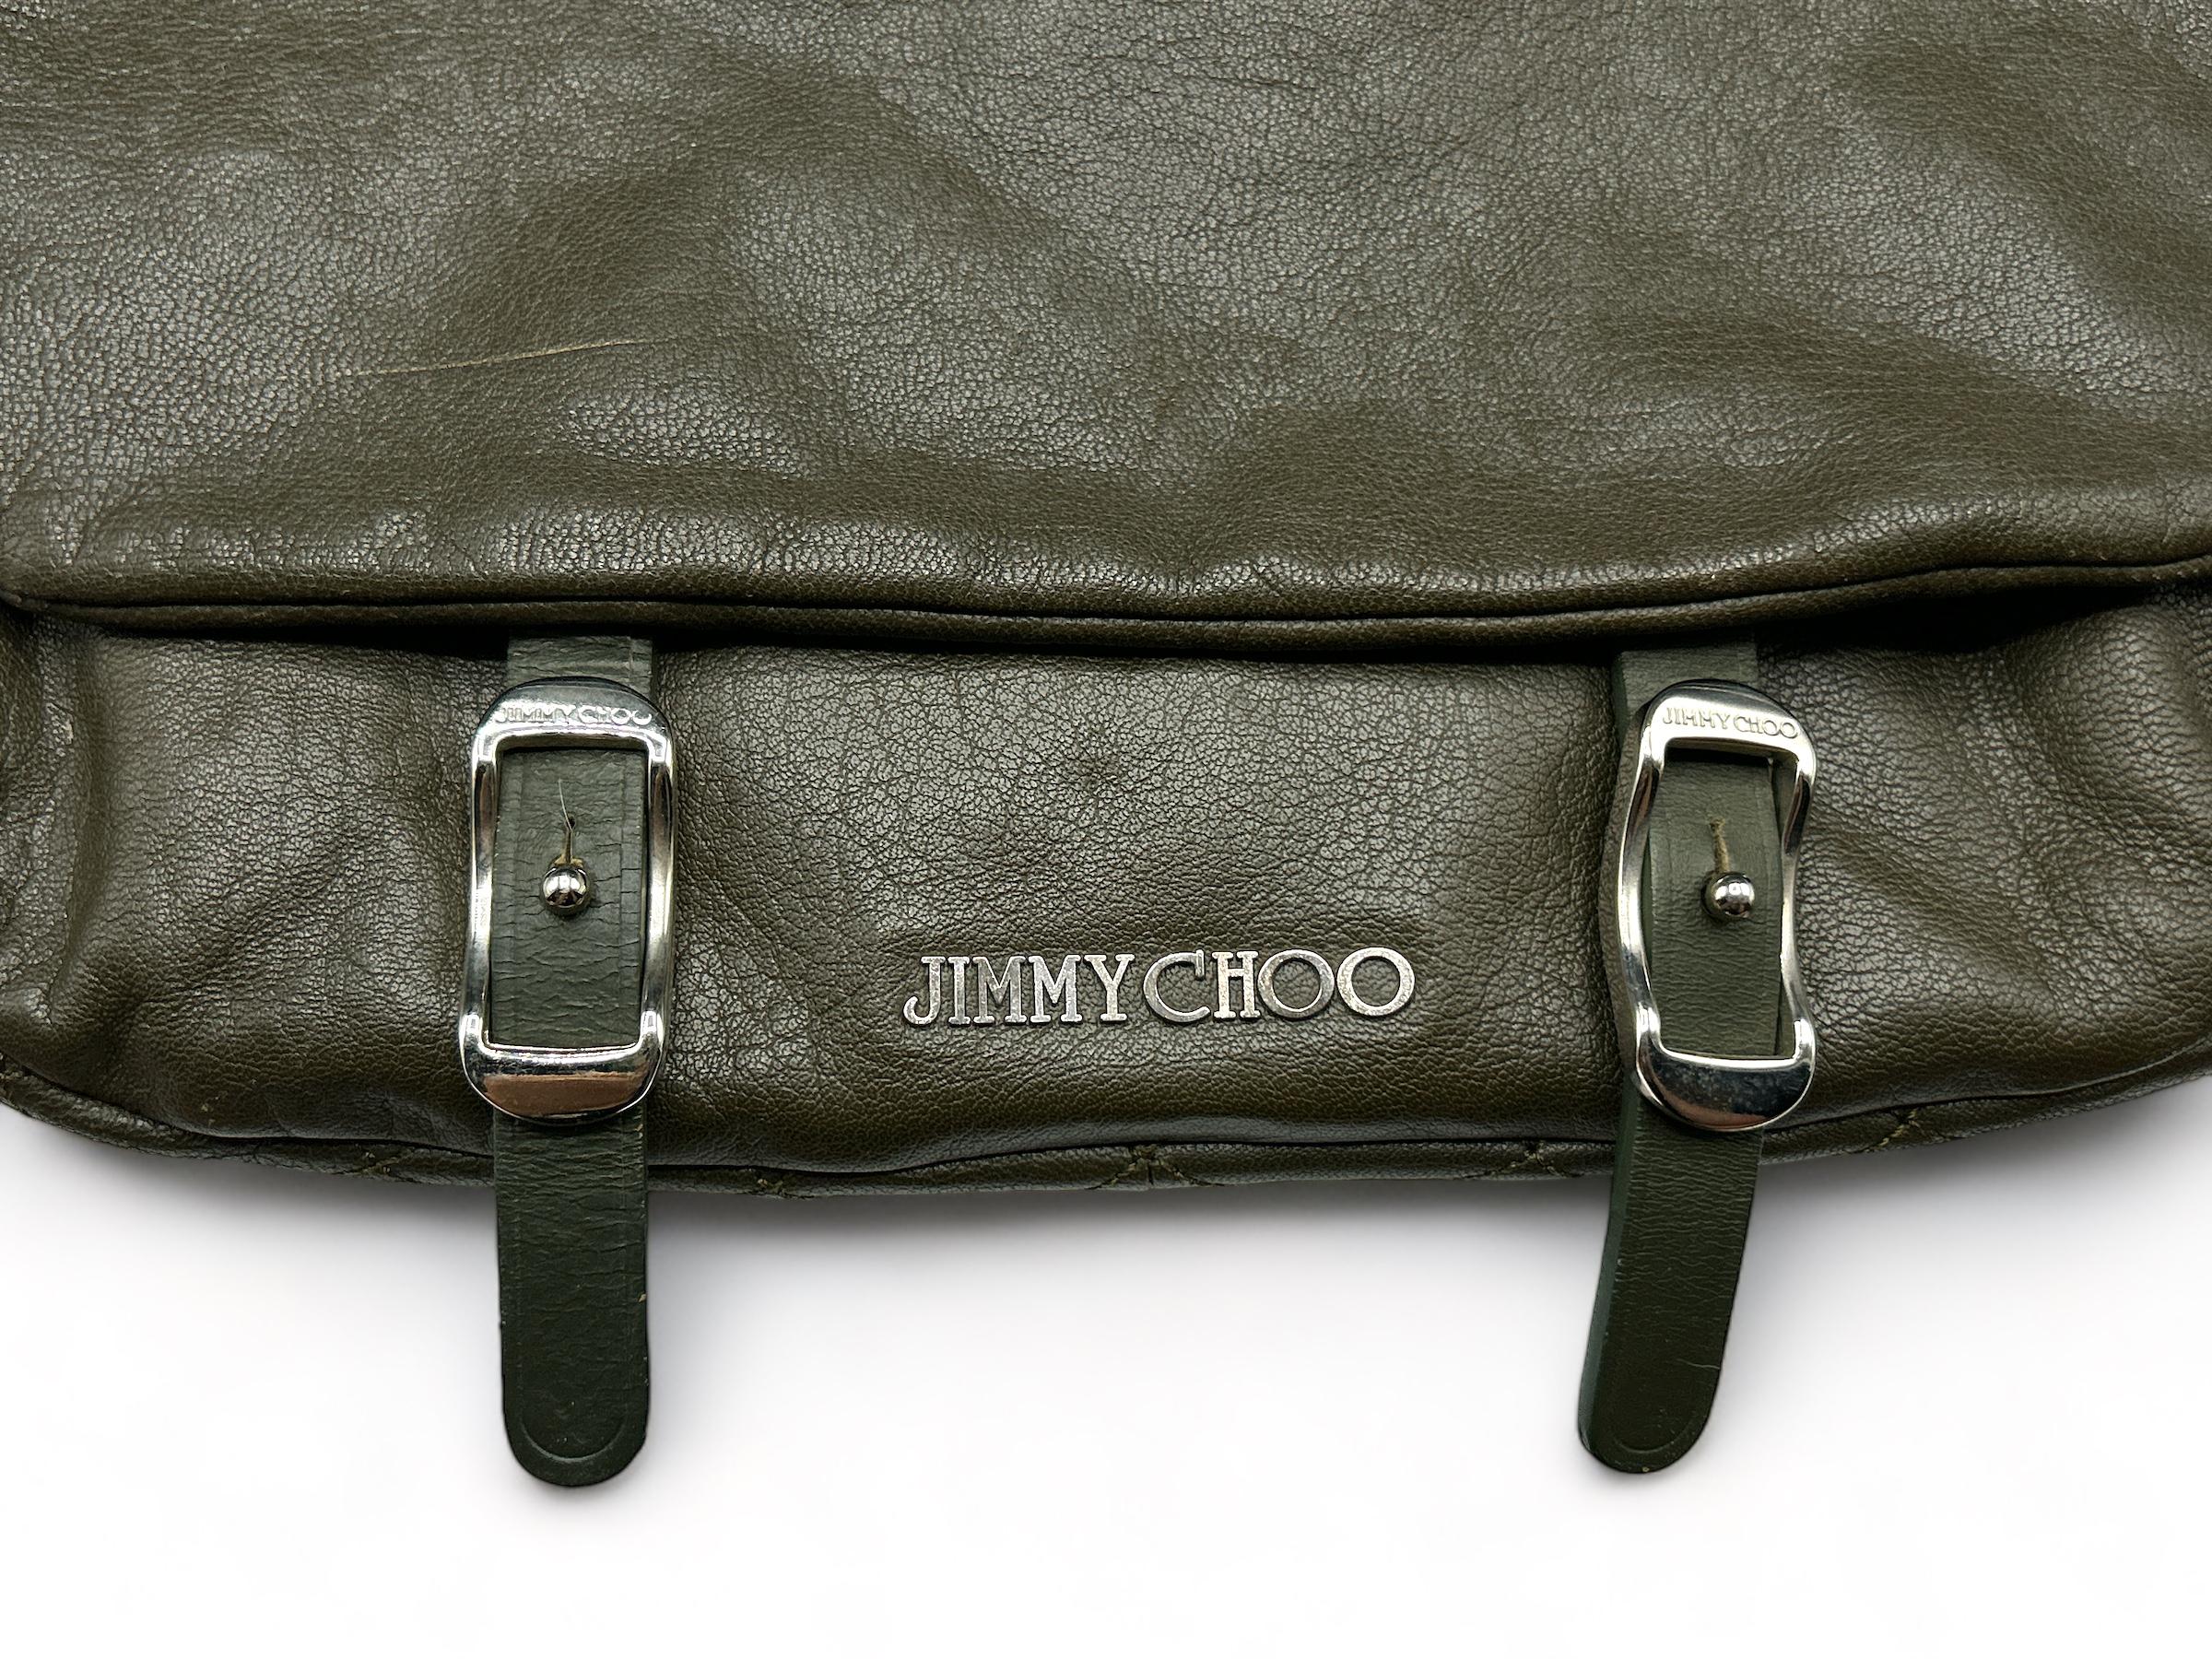 Green Jimmy Choo purse